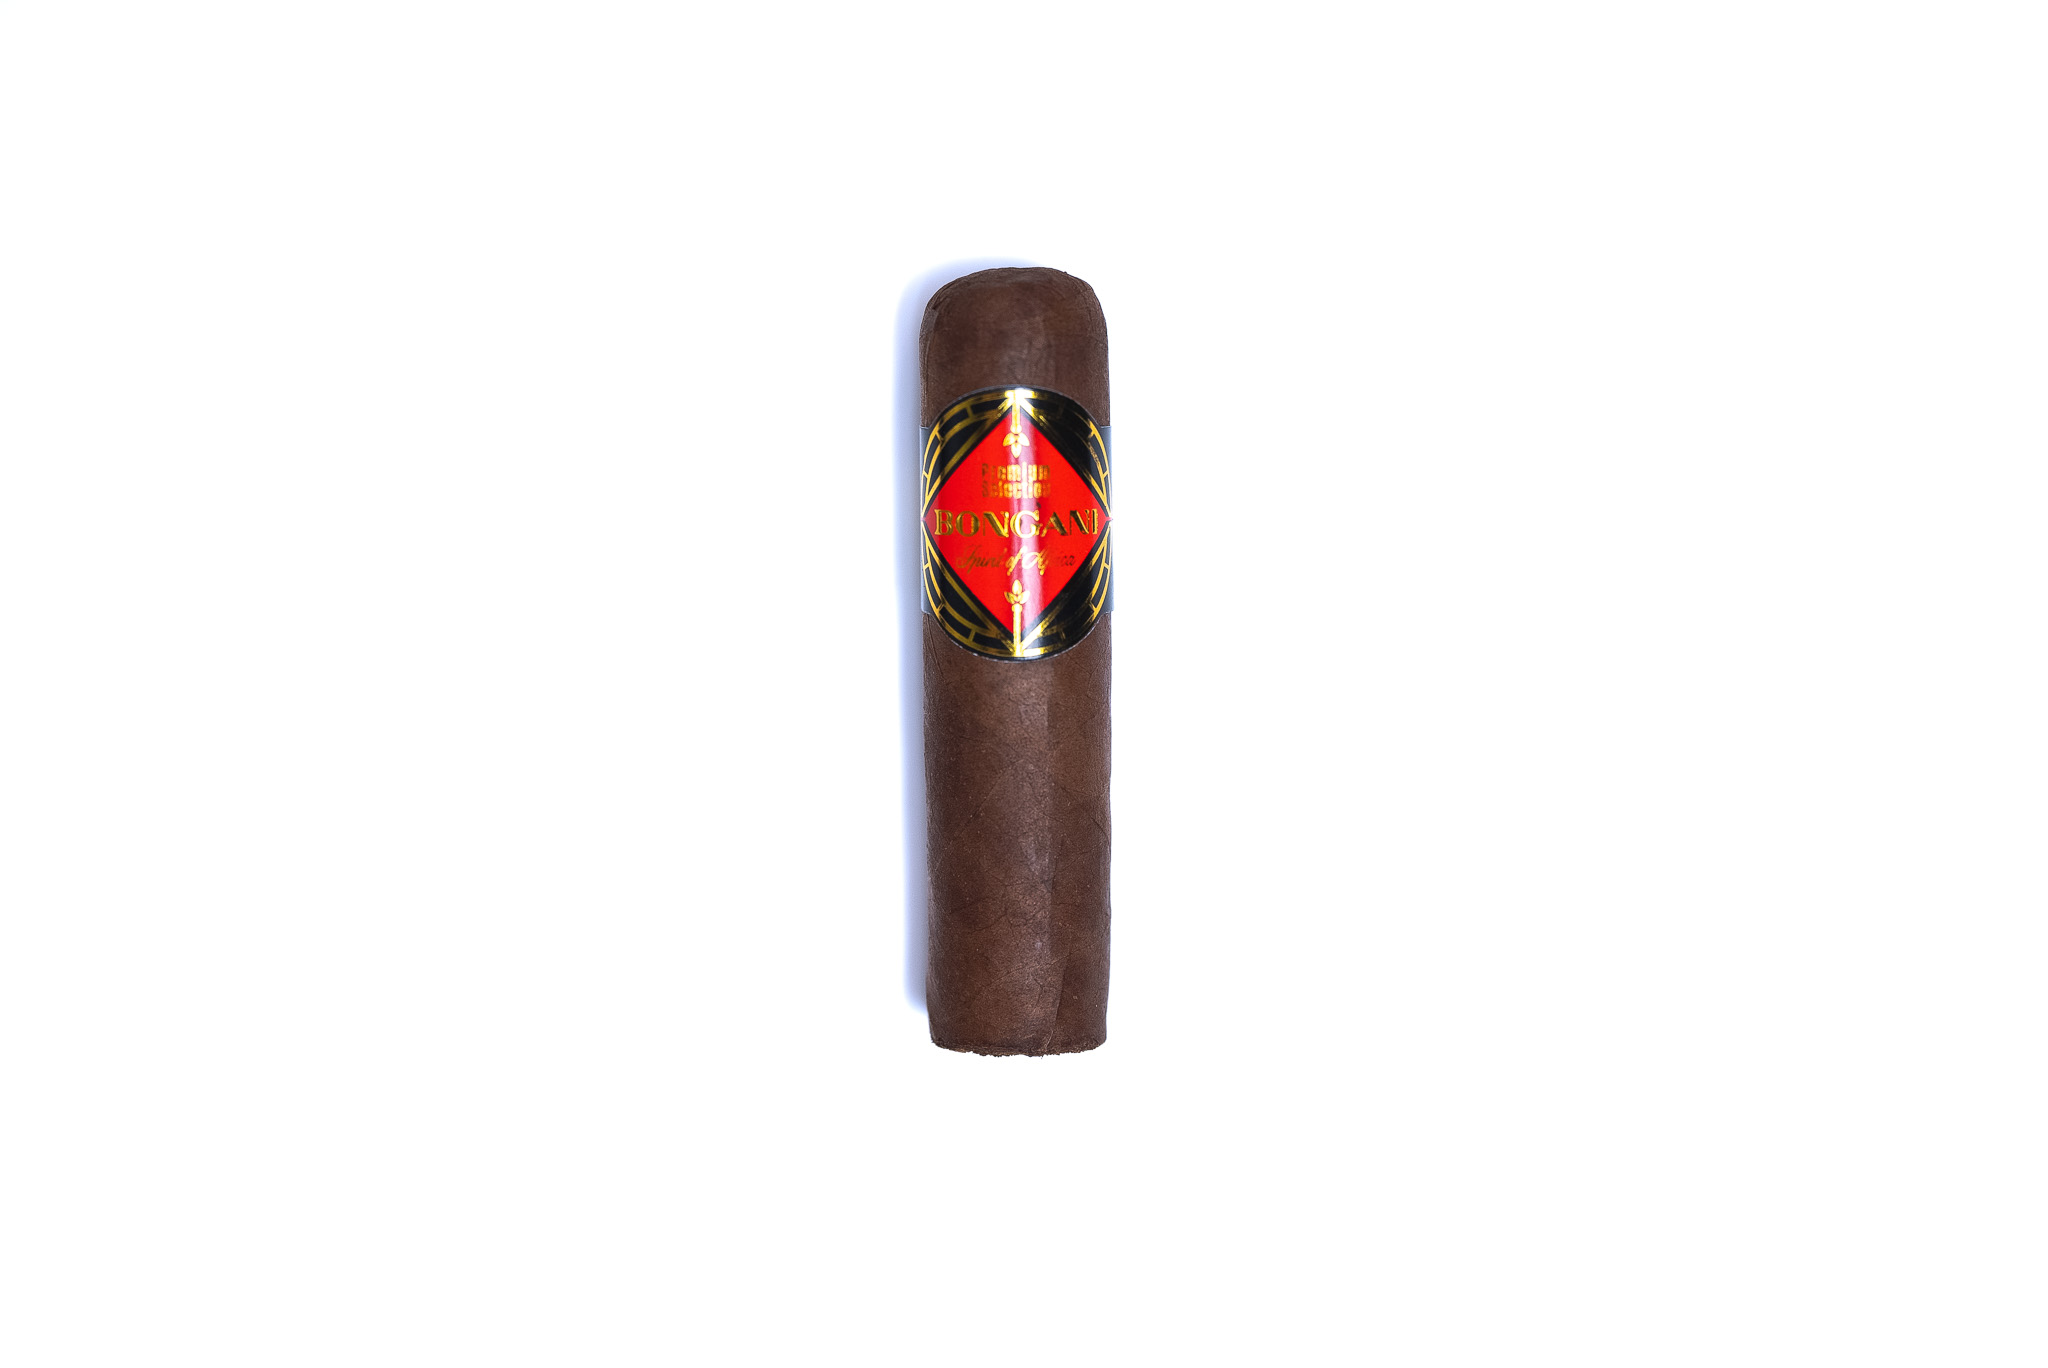 Buy Bogani 451 -2 Cigar Online